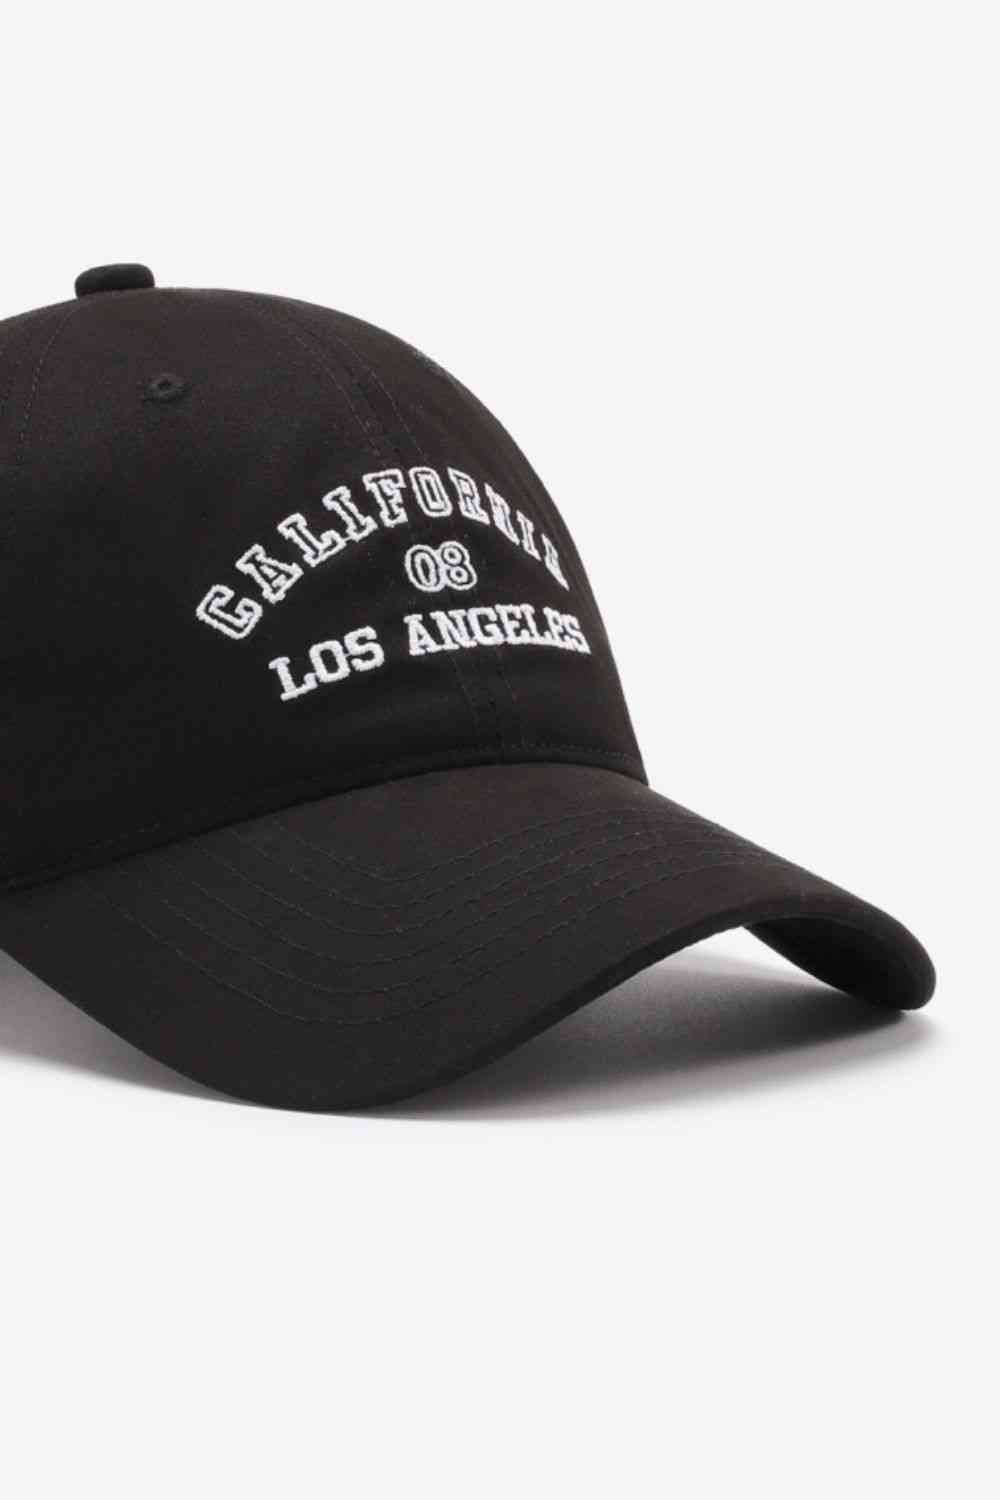 CALIFORNIA LOS ANGELES Adjustable Baseball Cap - Rose Gold Co. Shop